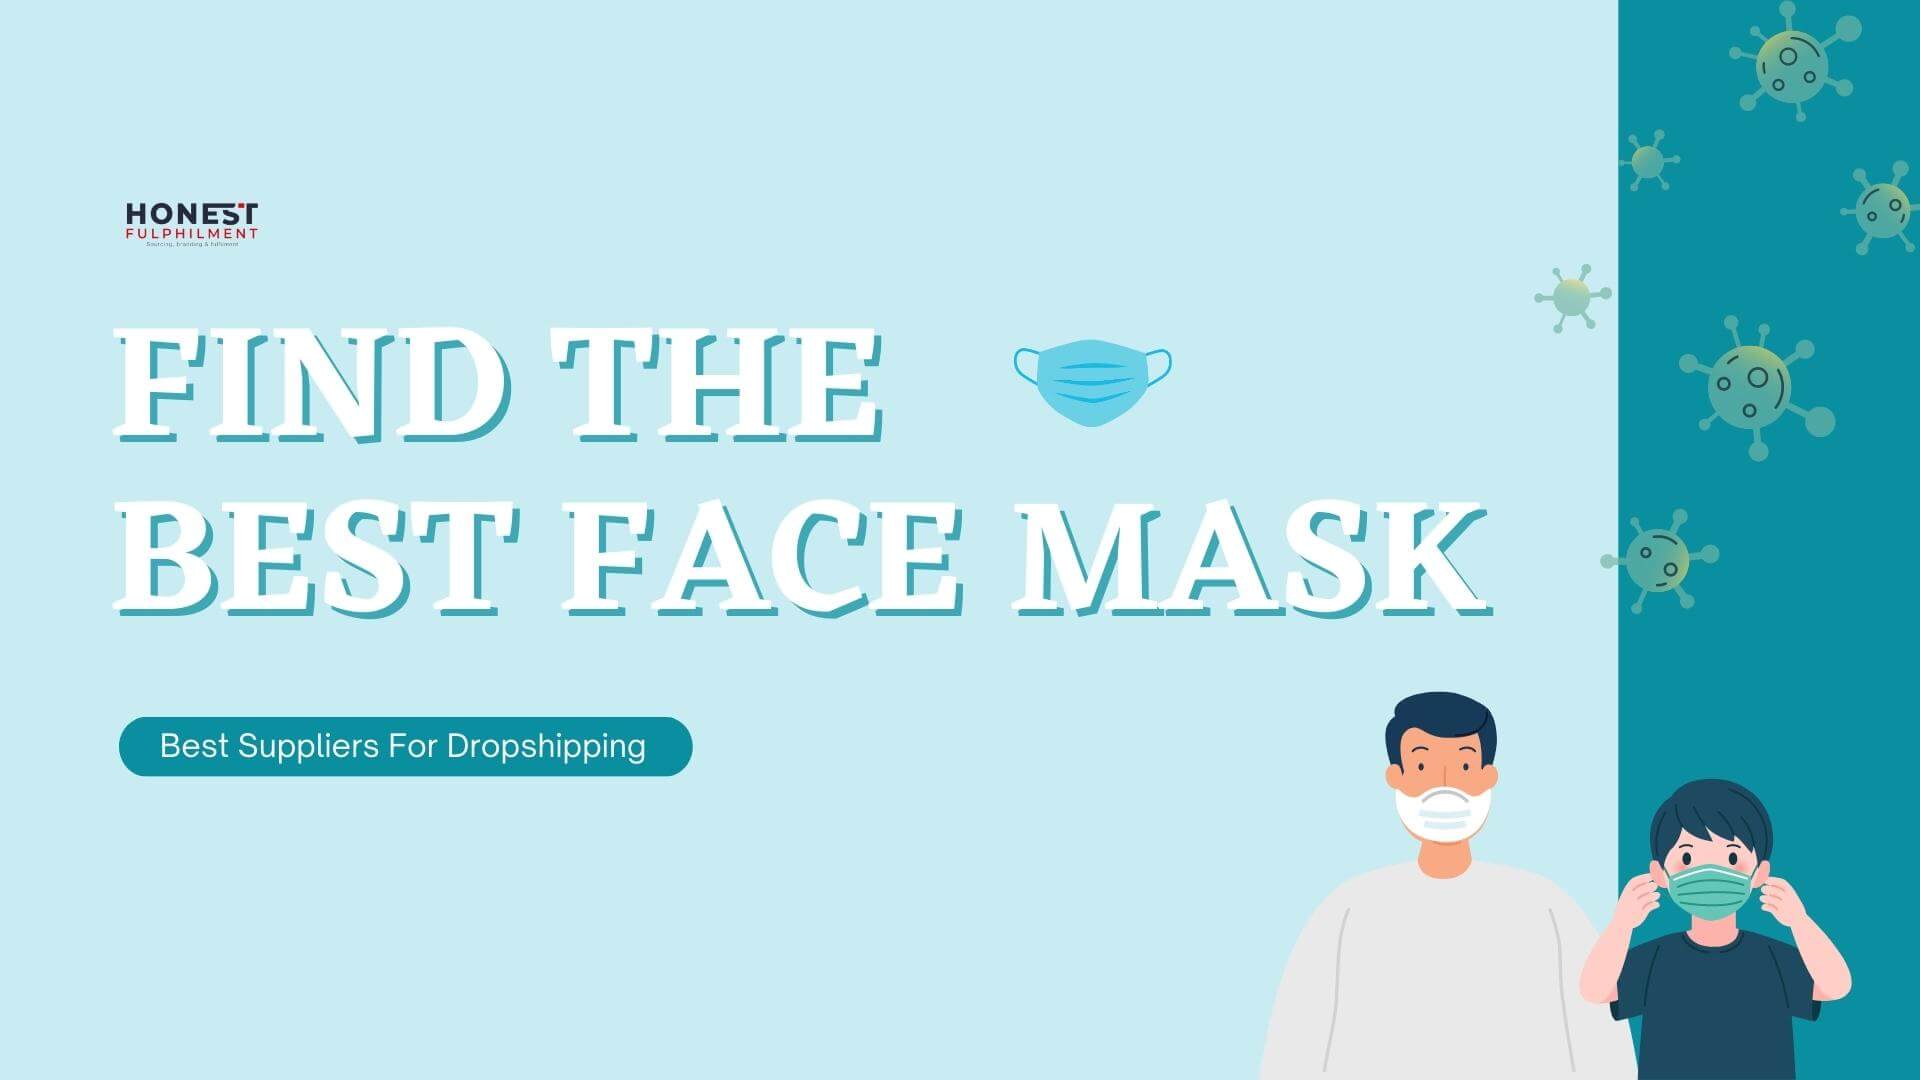 Best Face Mask